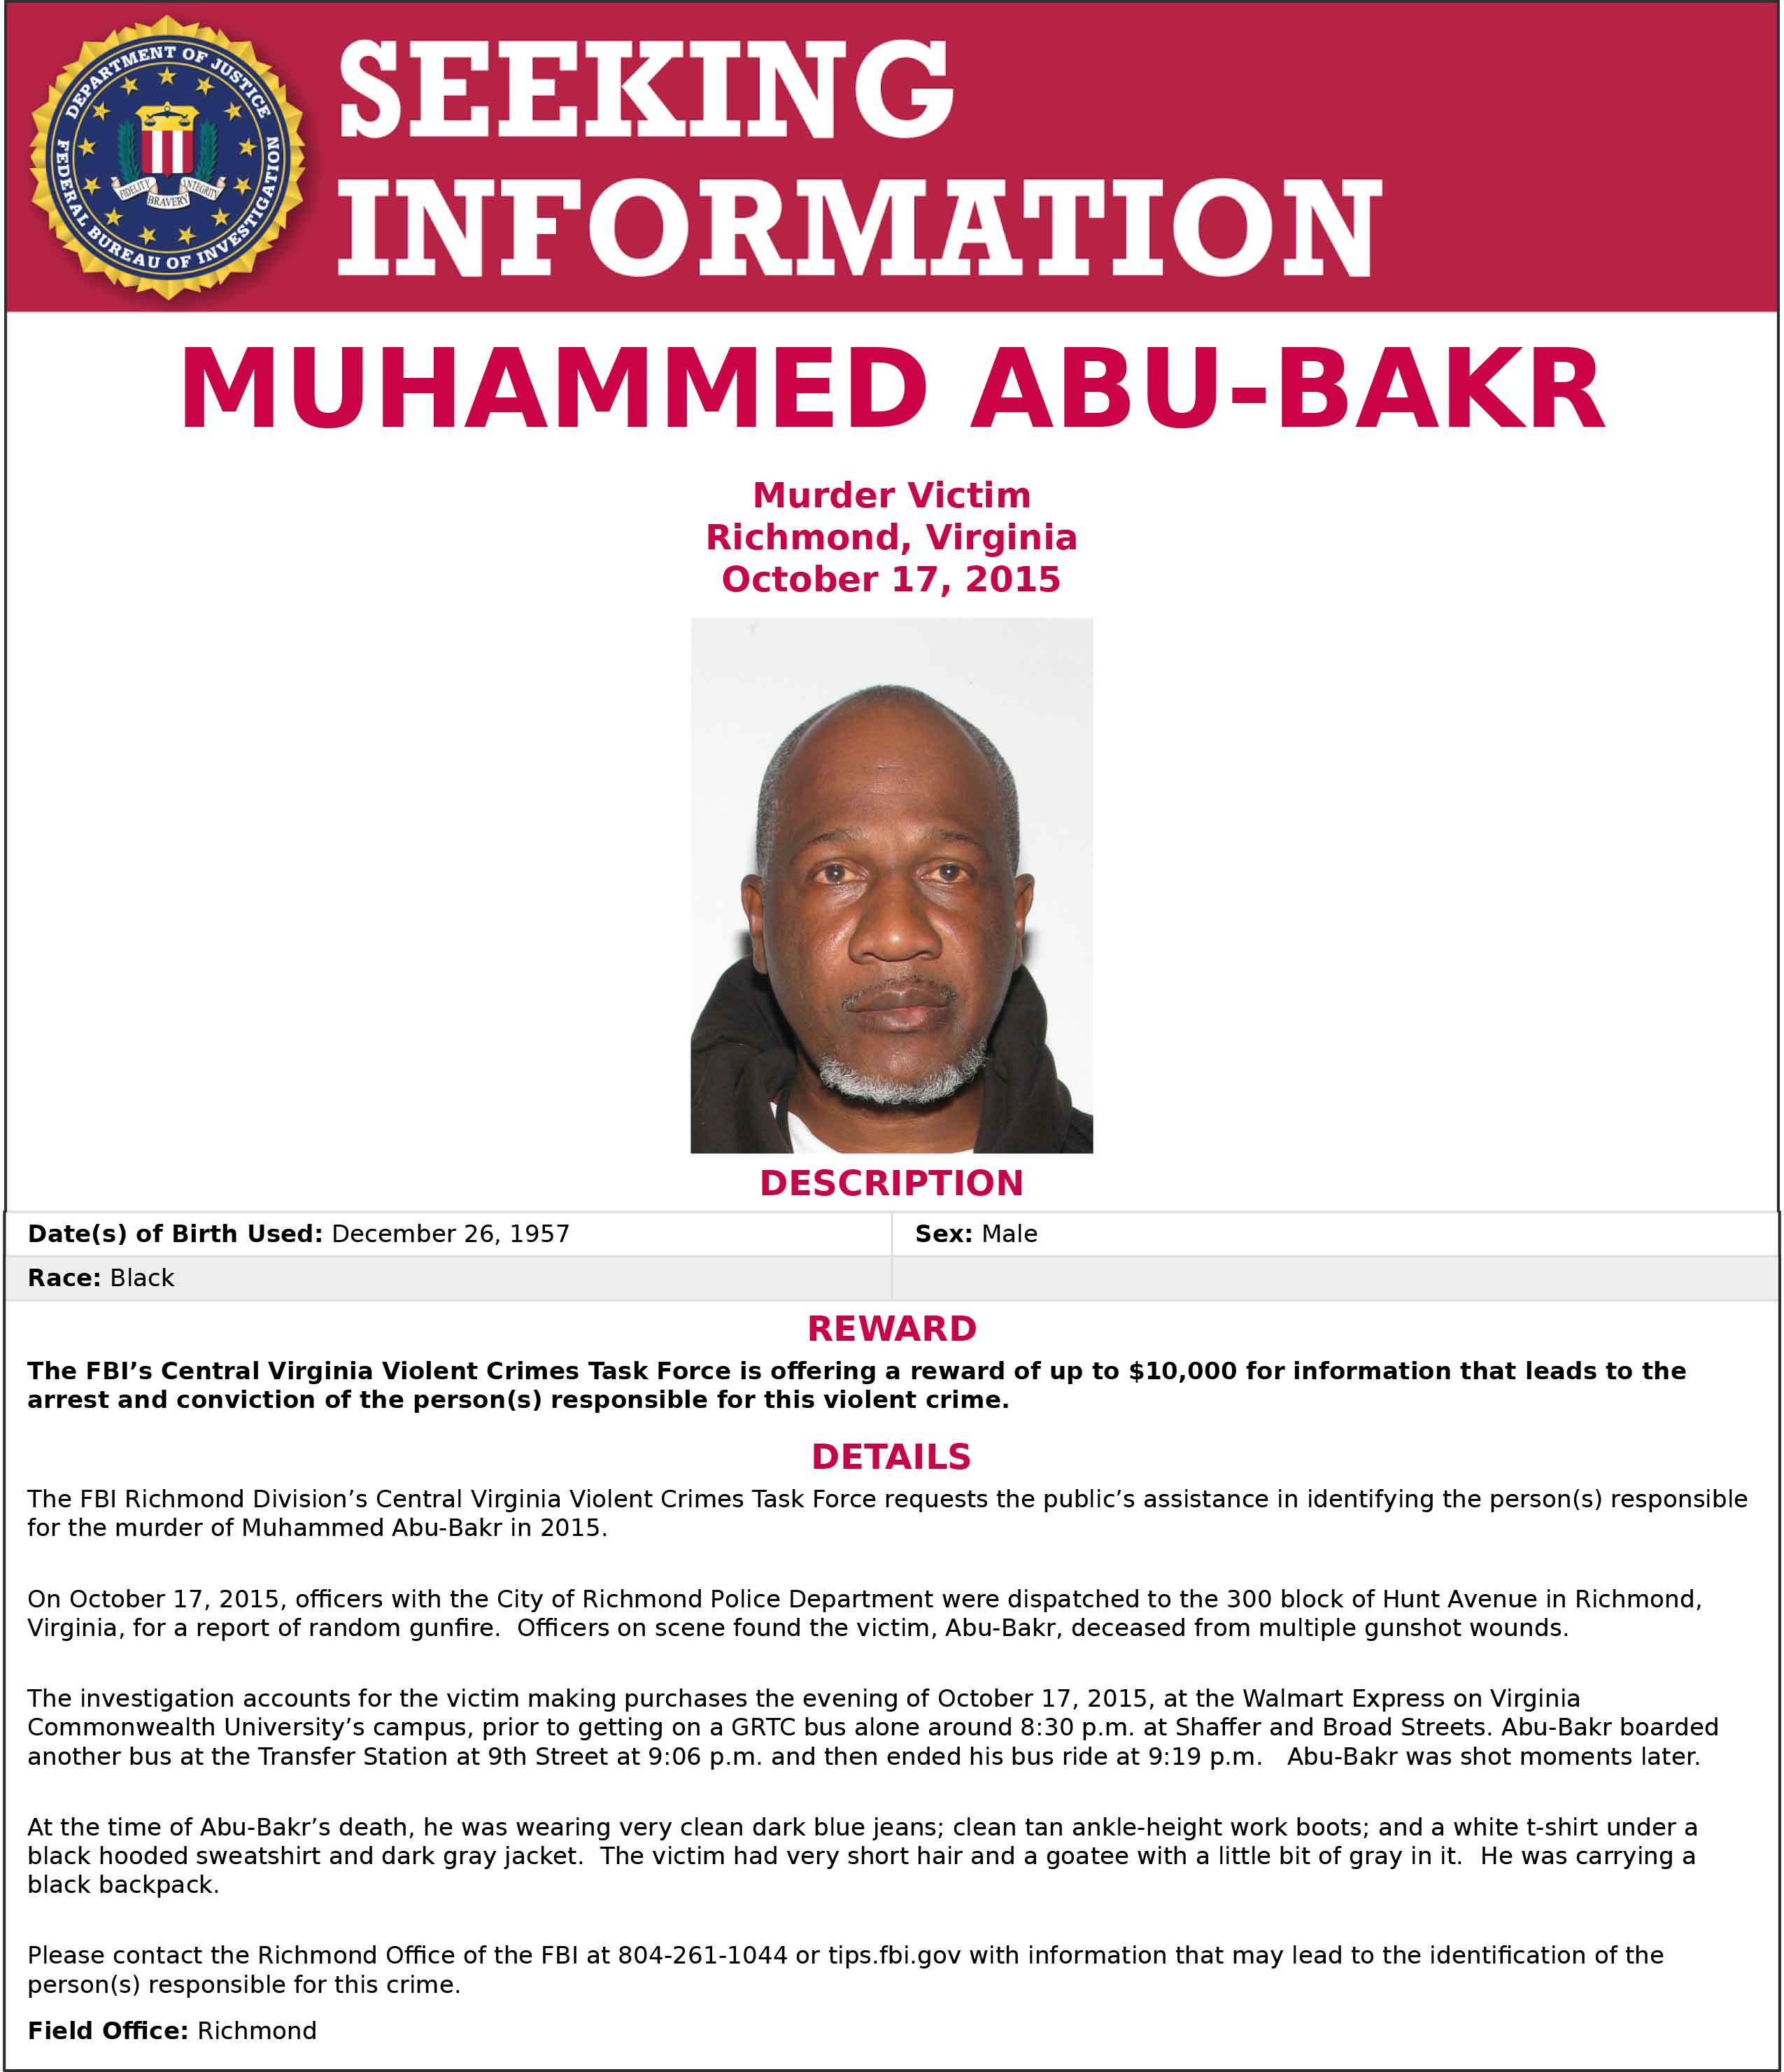 Muhammed Abu-Bakr (Courtesy of the FBI)